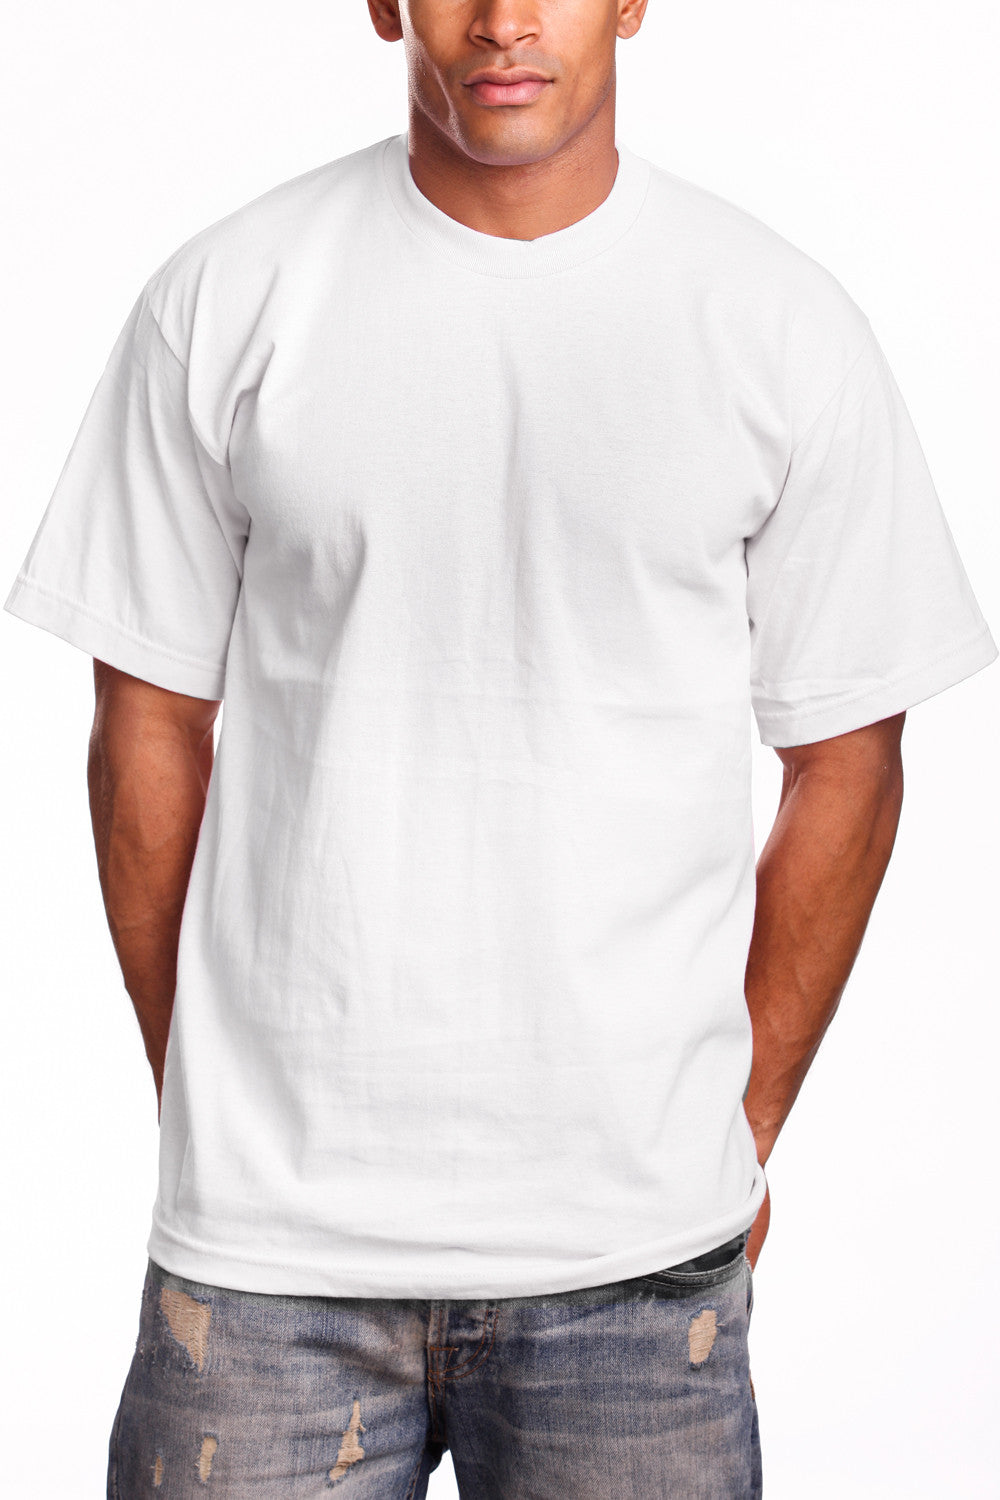 white athletic shirt